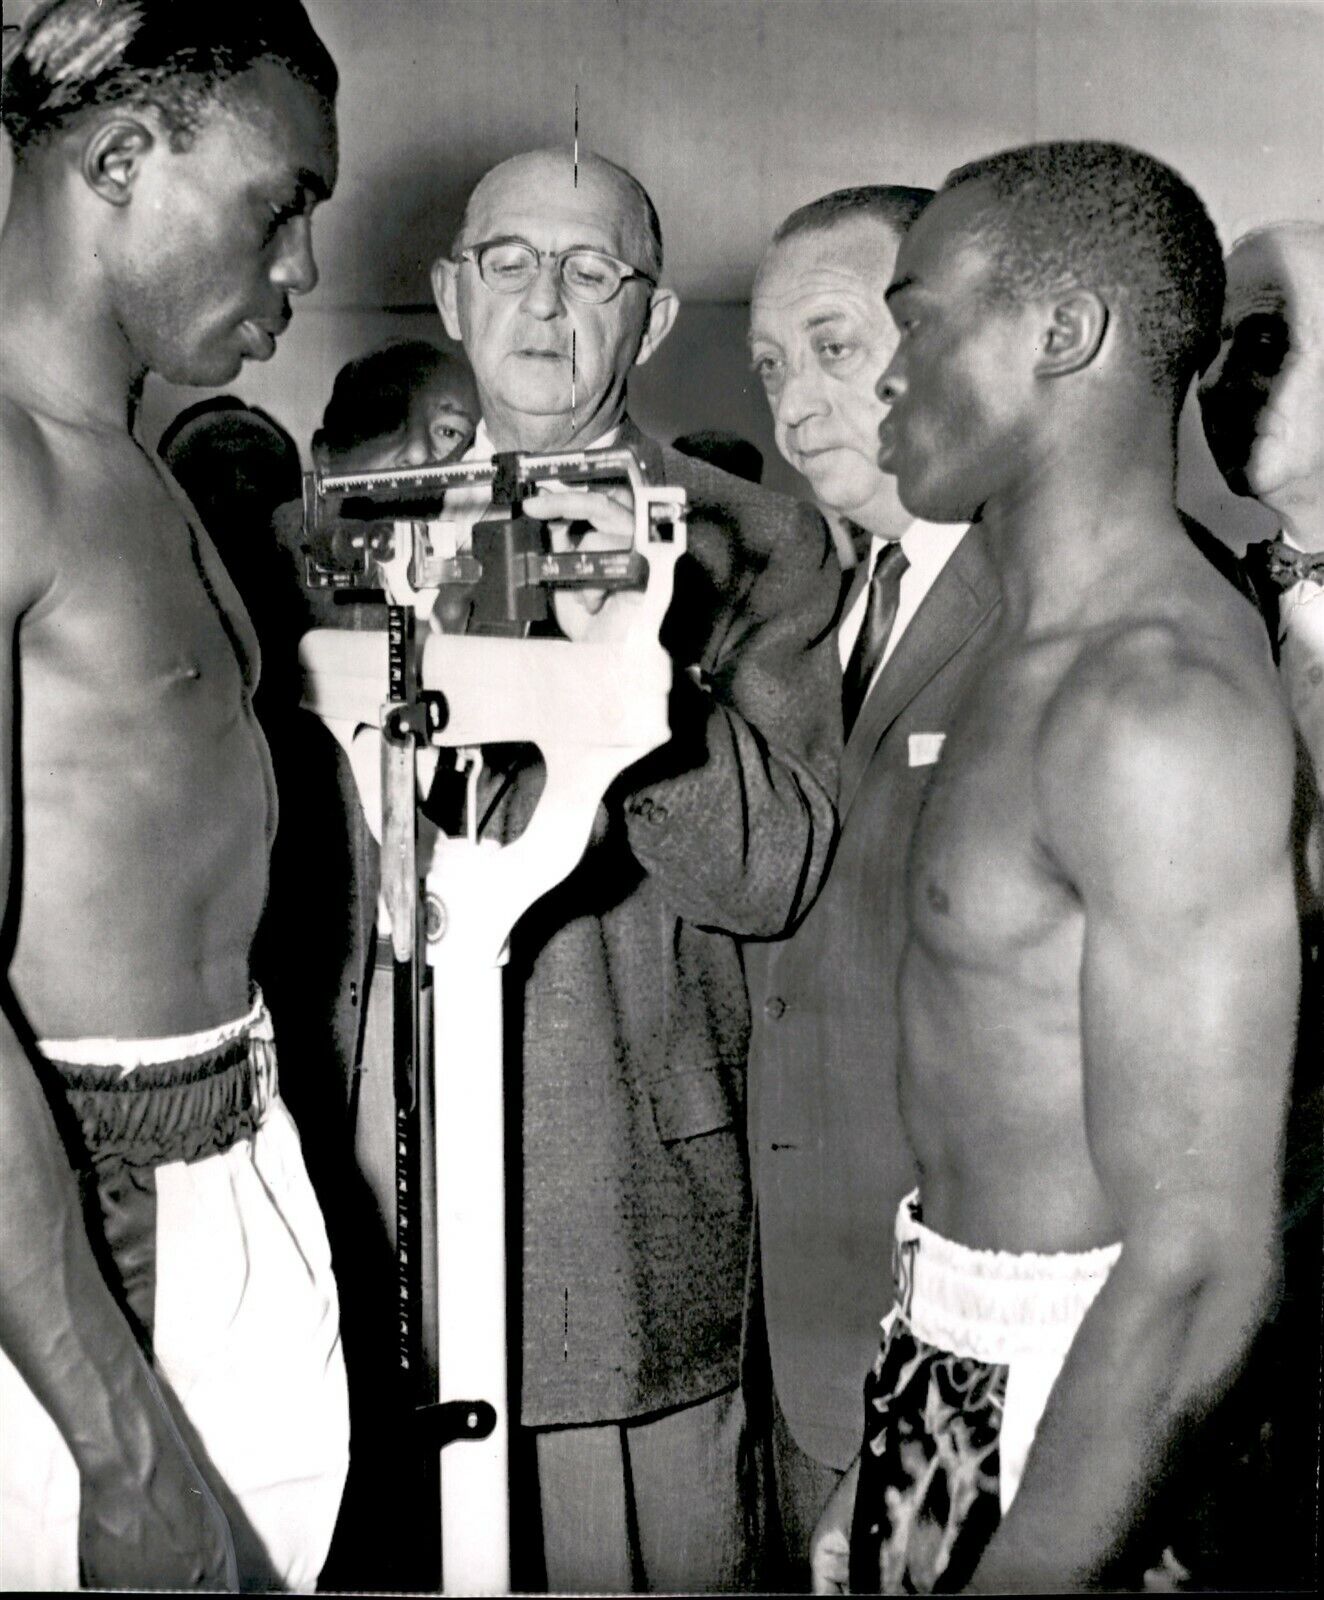 LG901 1957 AP Wire Photo JOE BROWN v BUD SMITH World Lightweight Boxing Title